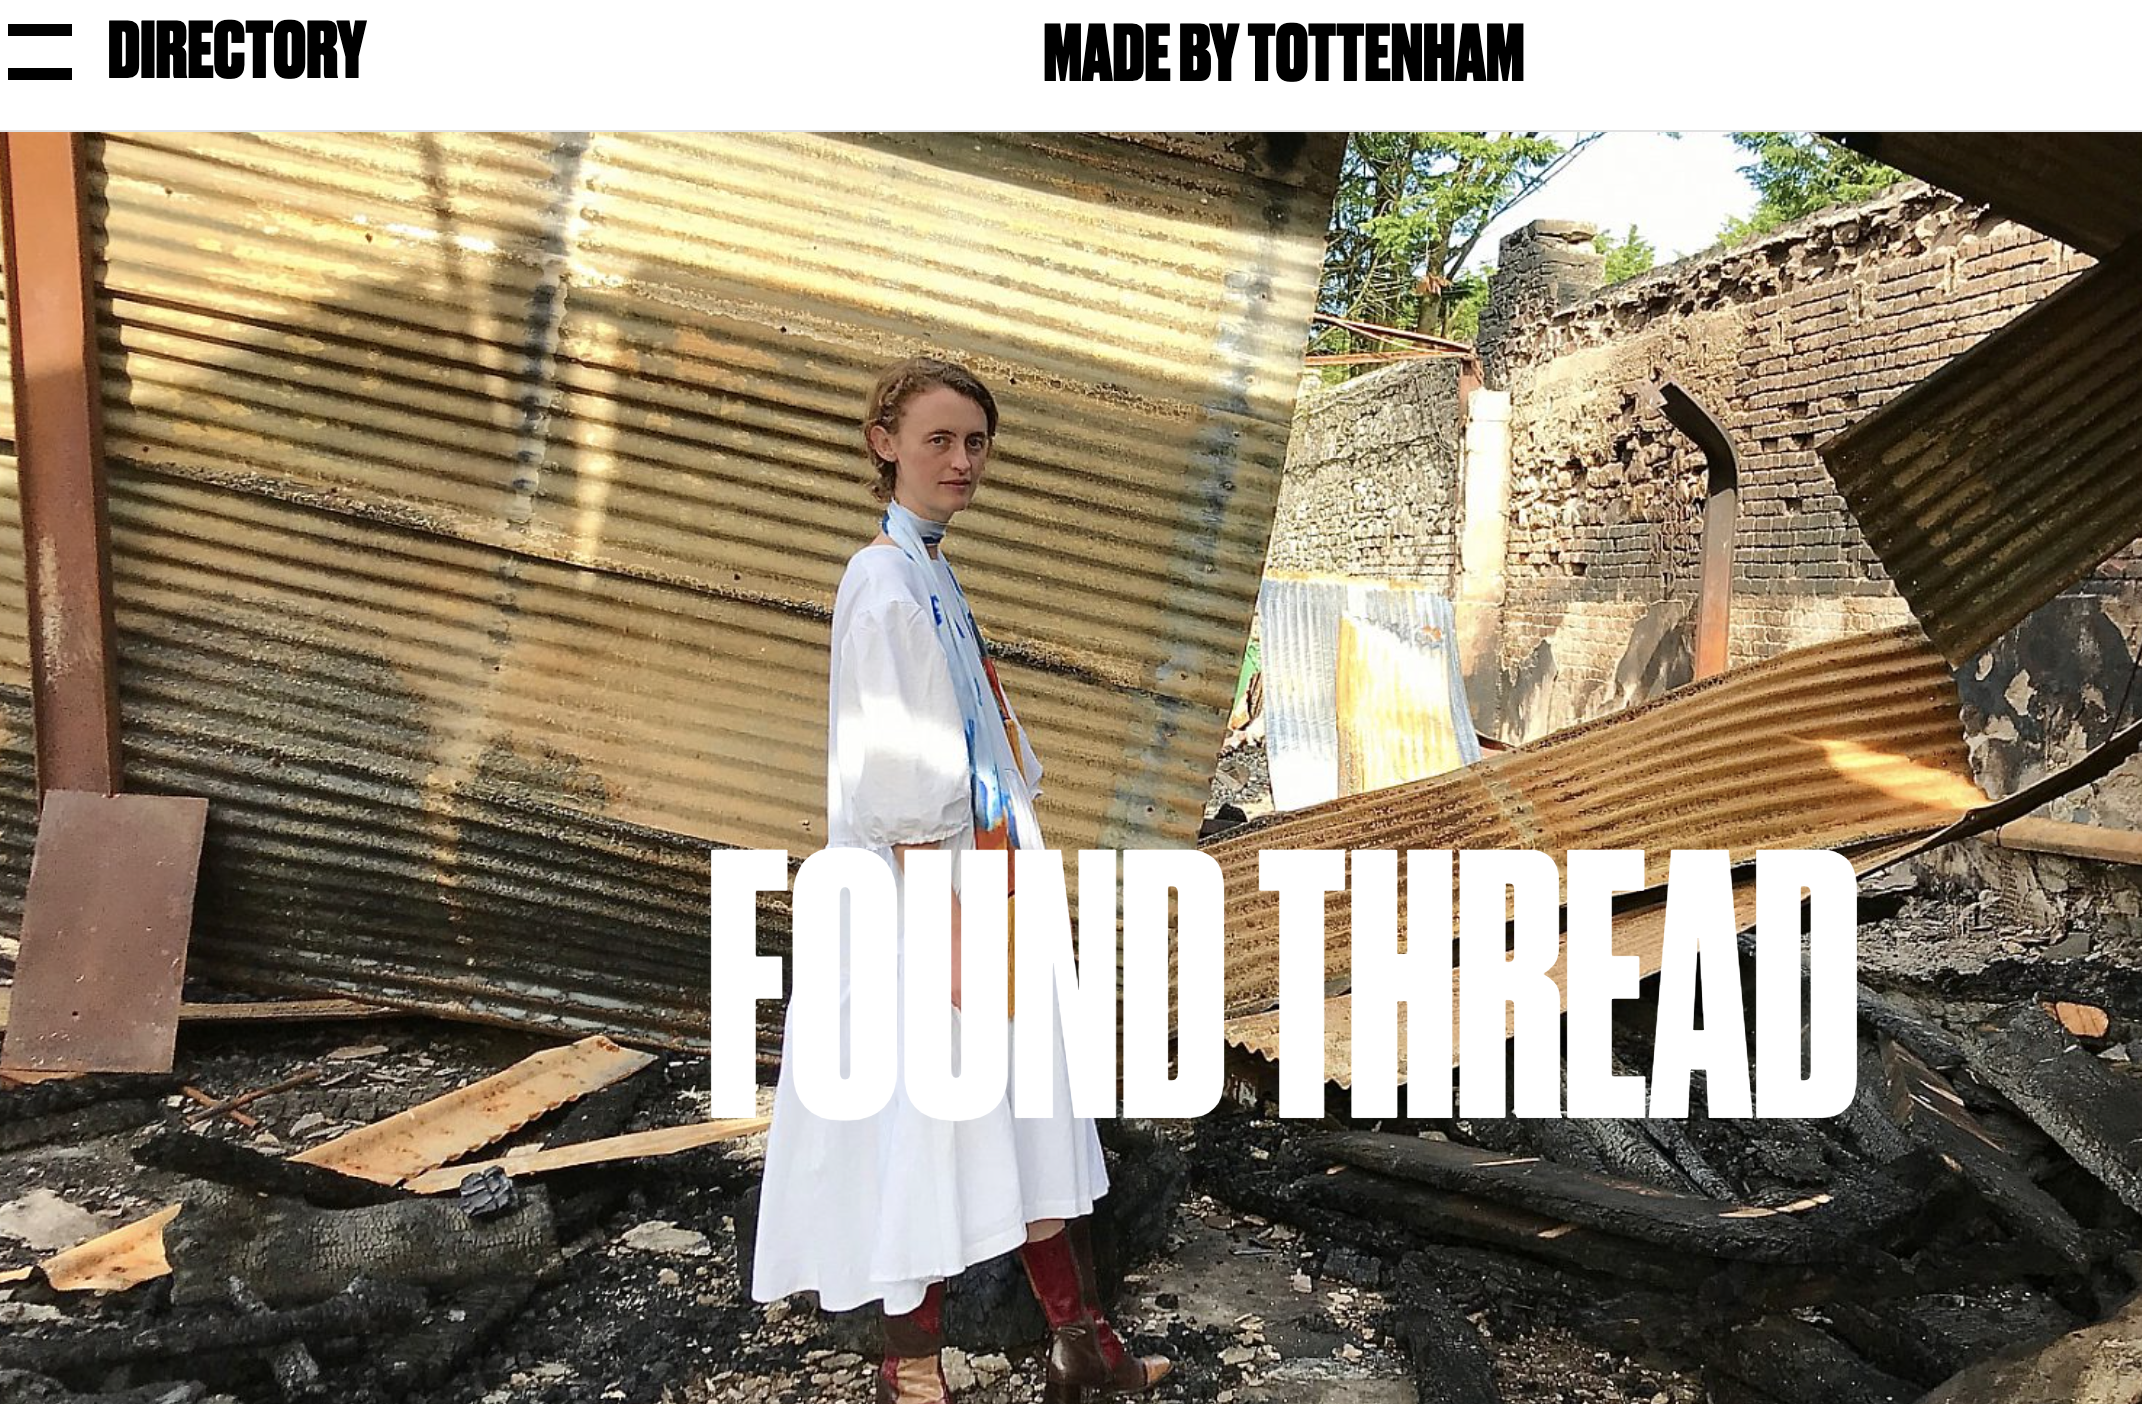 Made by Tottenham  Tottenham creative talent / London